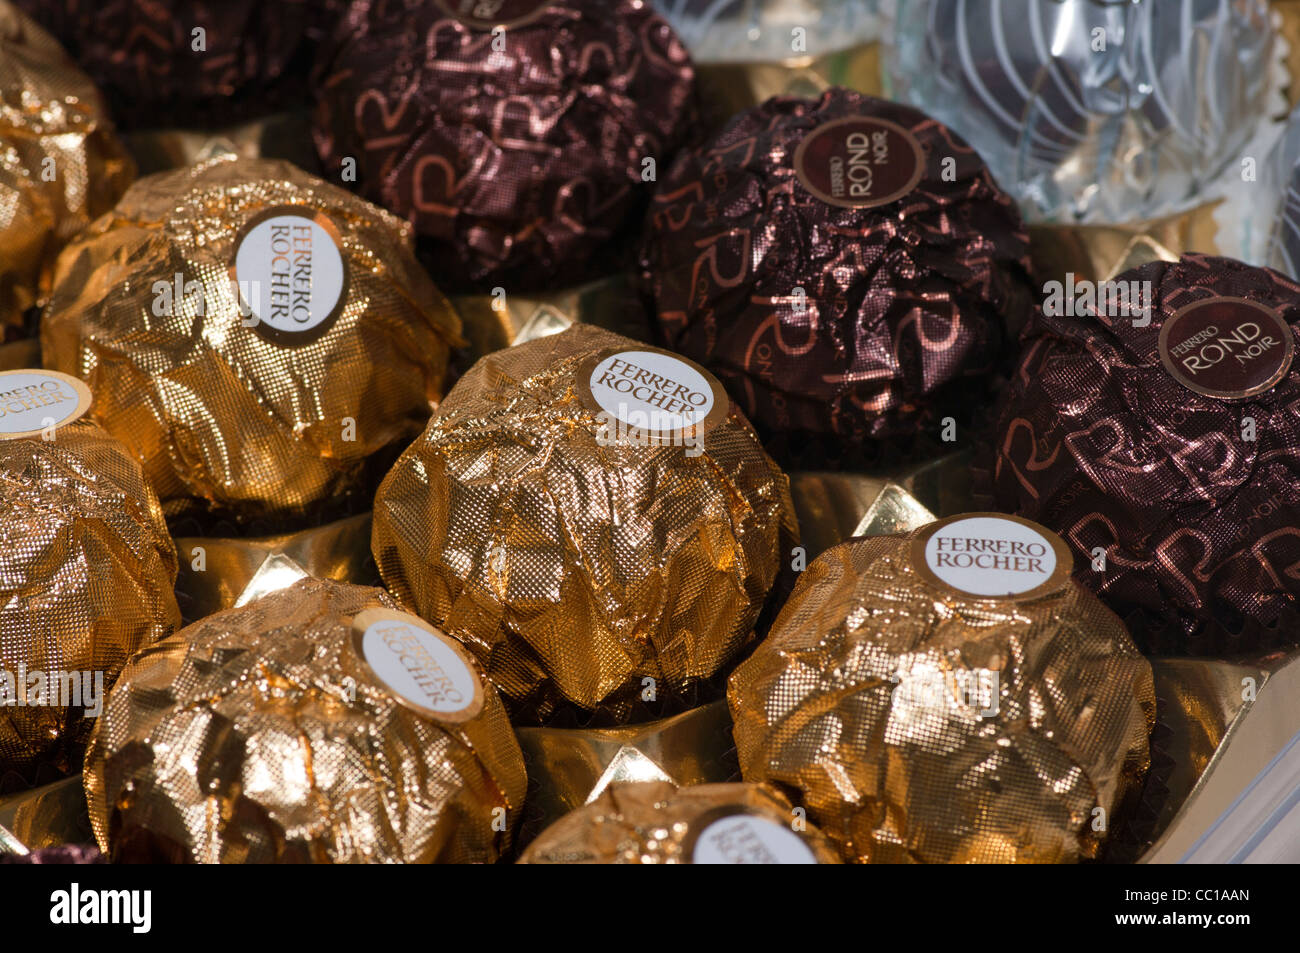 Pocket Coffee Ferrero Chocolates Editorial Photo - Image of european,  chocolate: 245989181